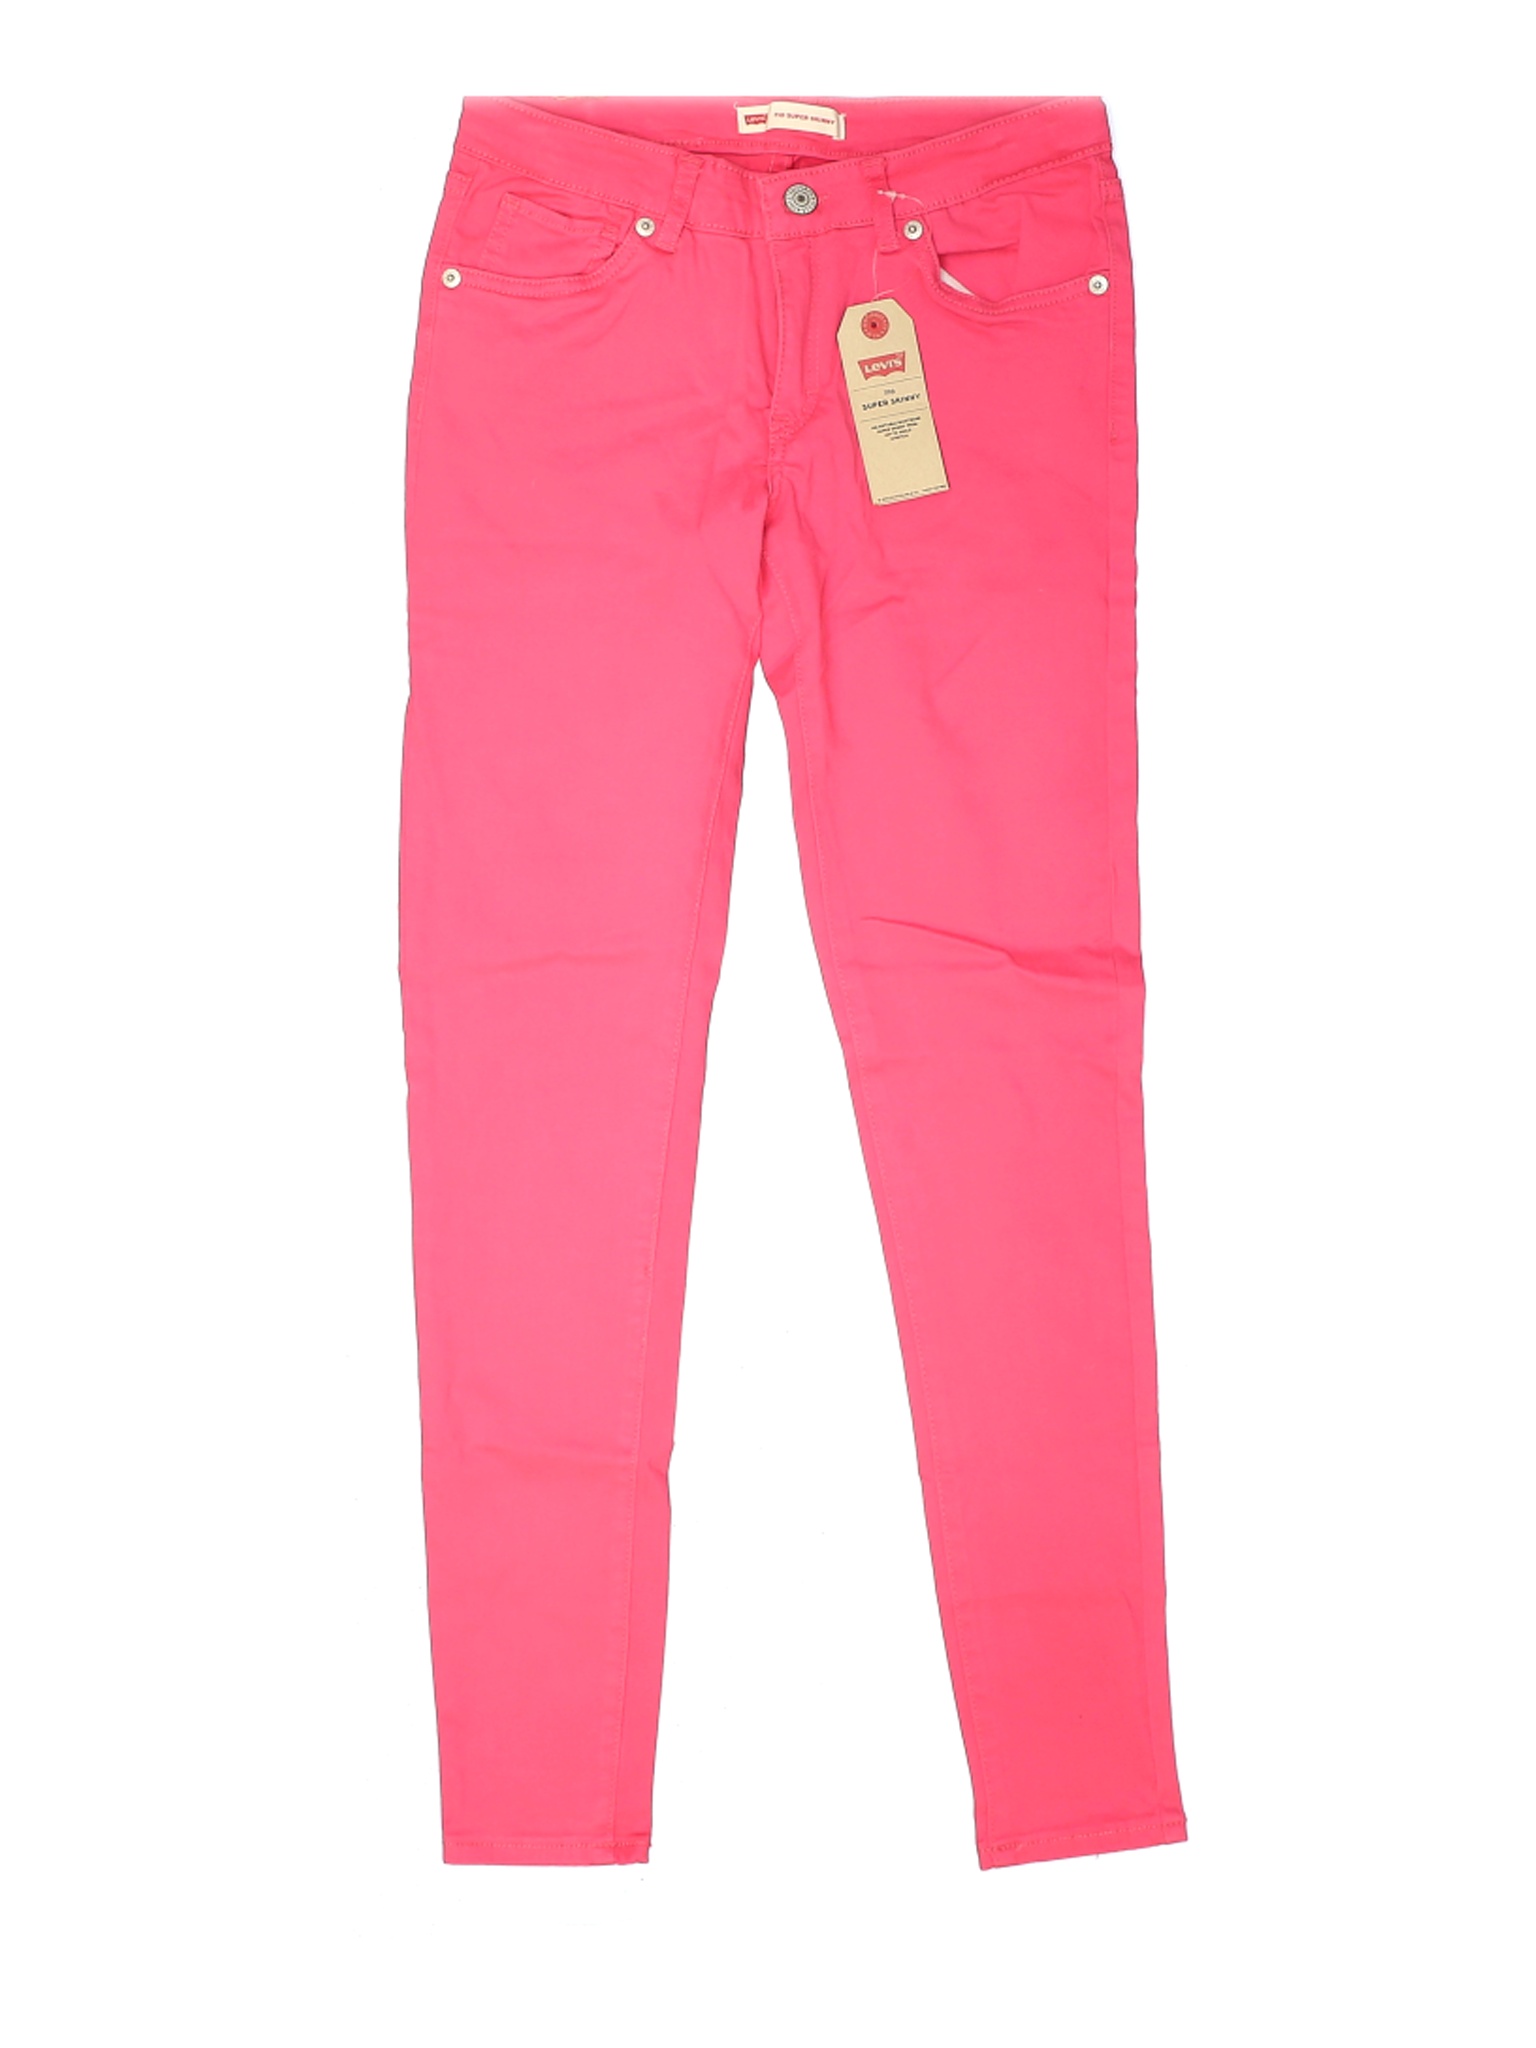 NWT Levi's Girls Pink Jeans 16 | eBay